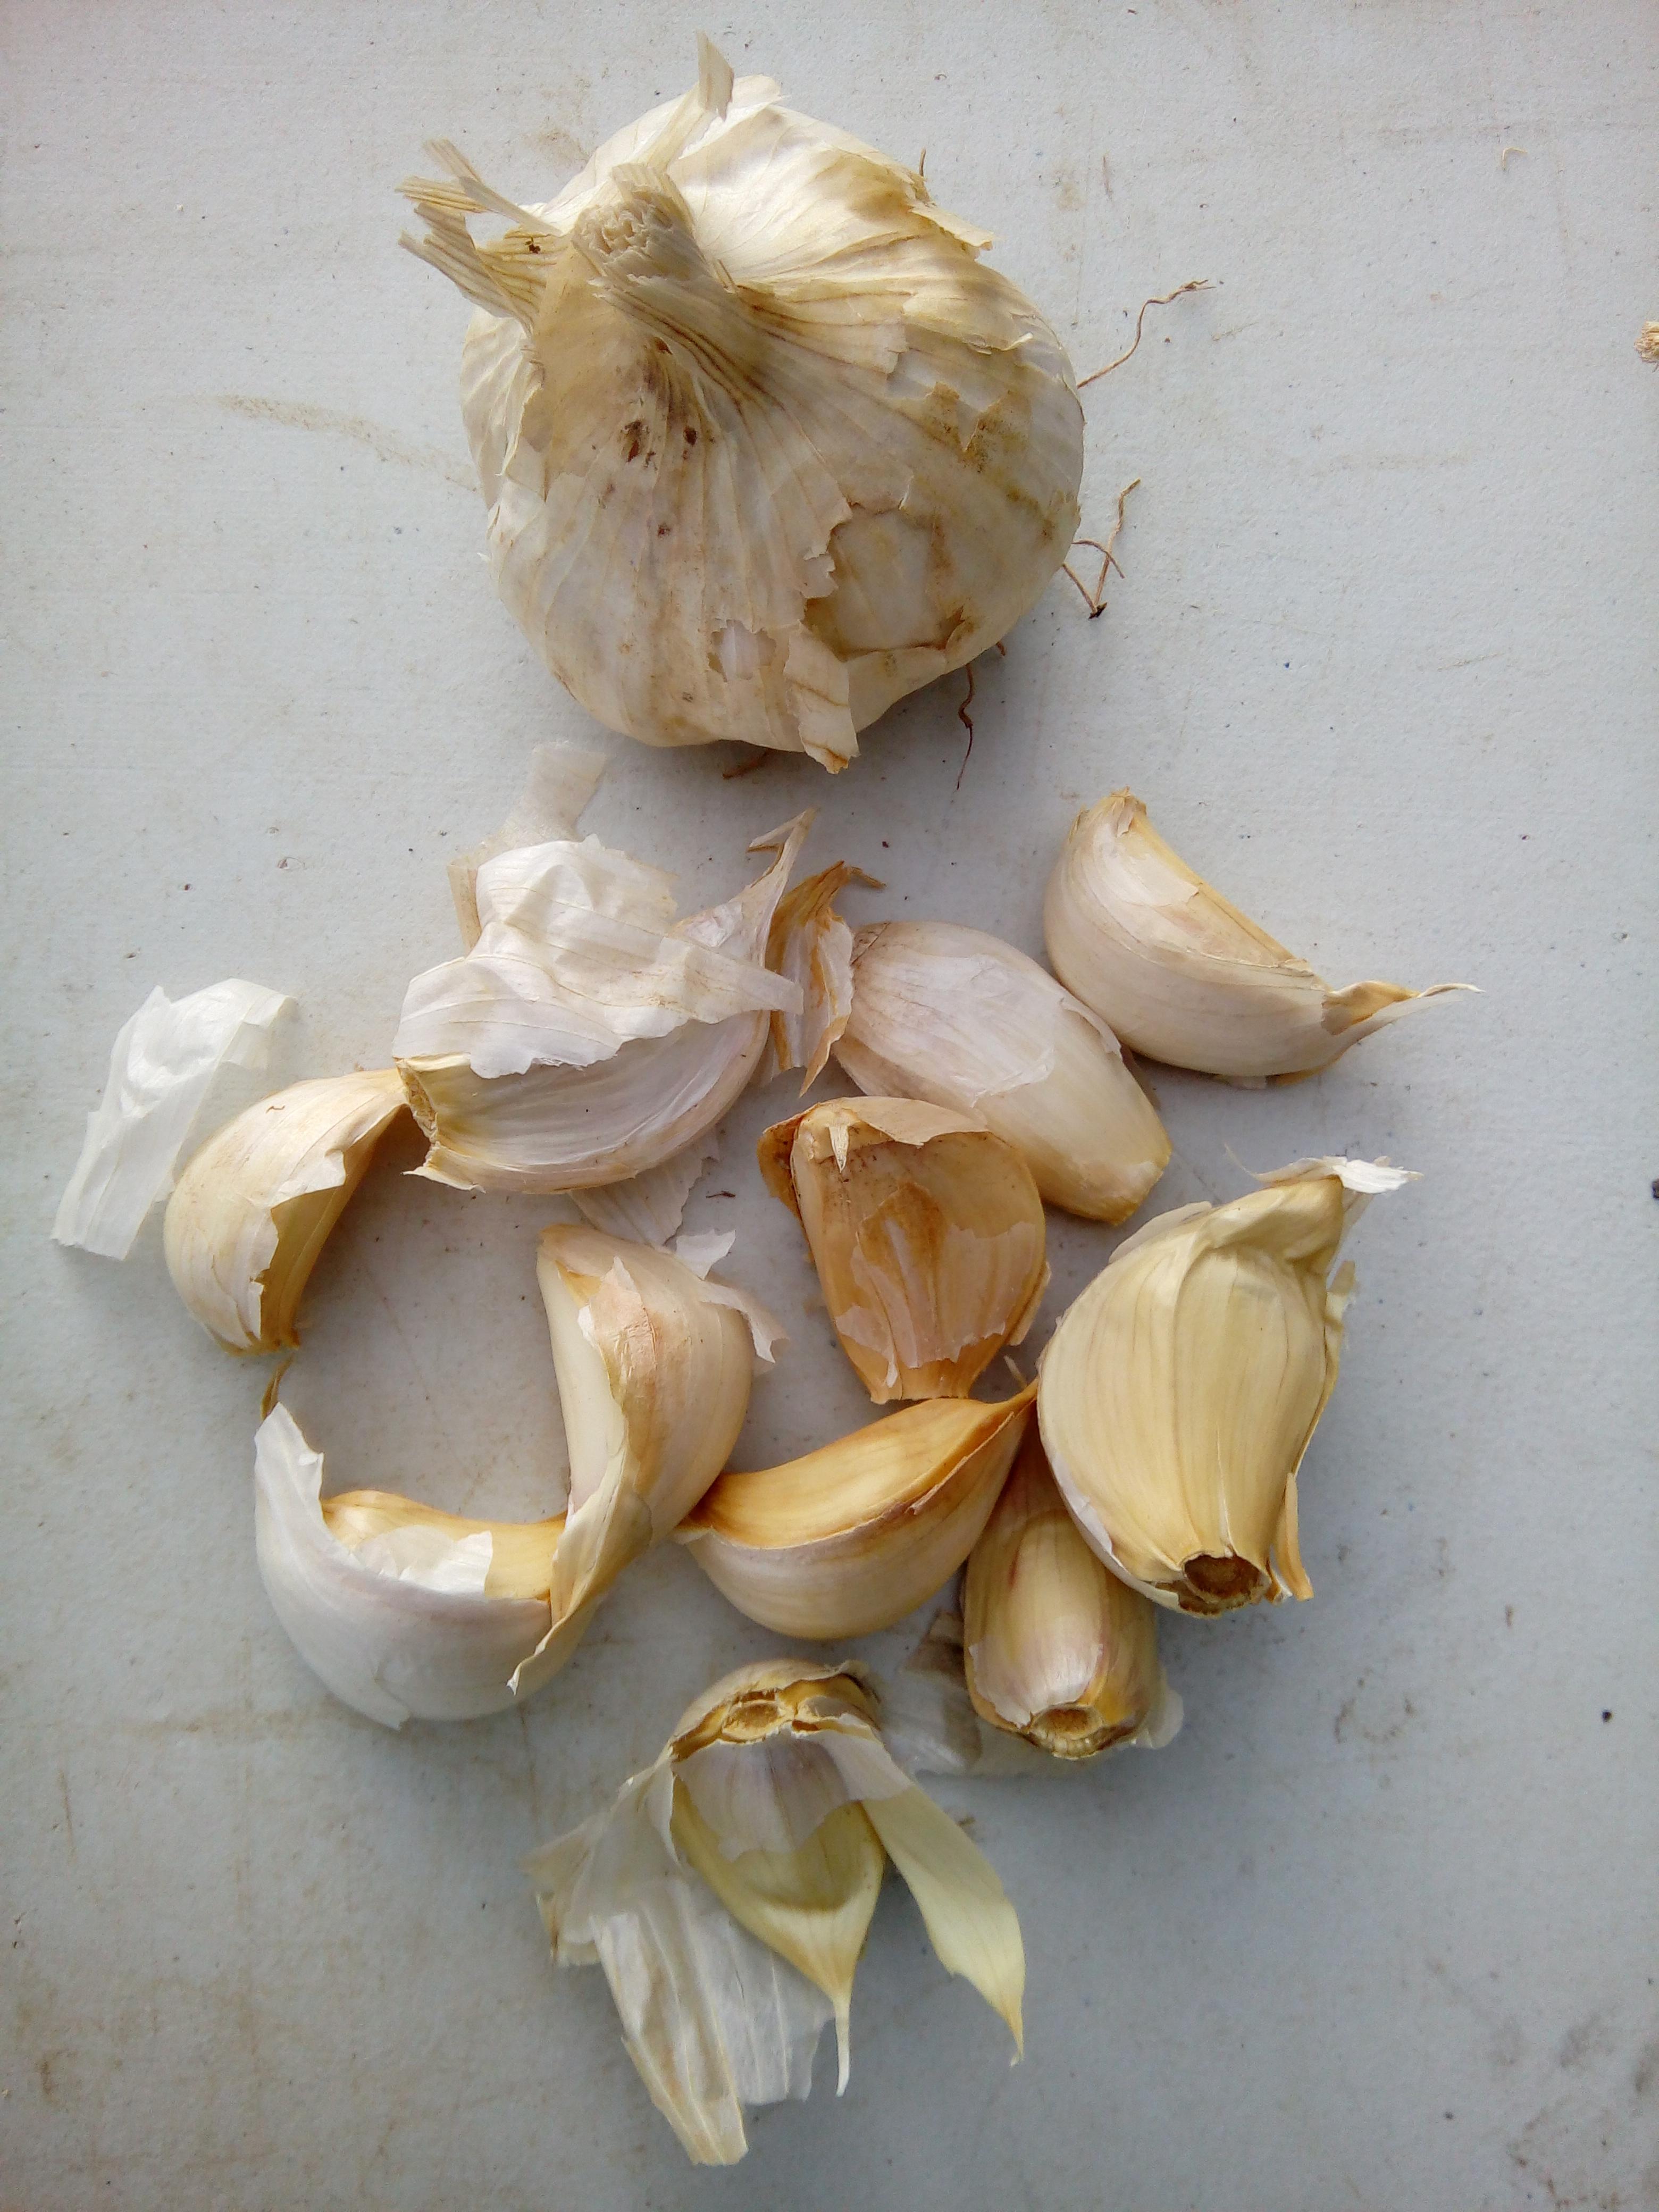 Planting Garlic -  Softneck garlic (no flower/scapes)